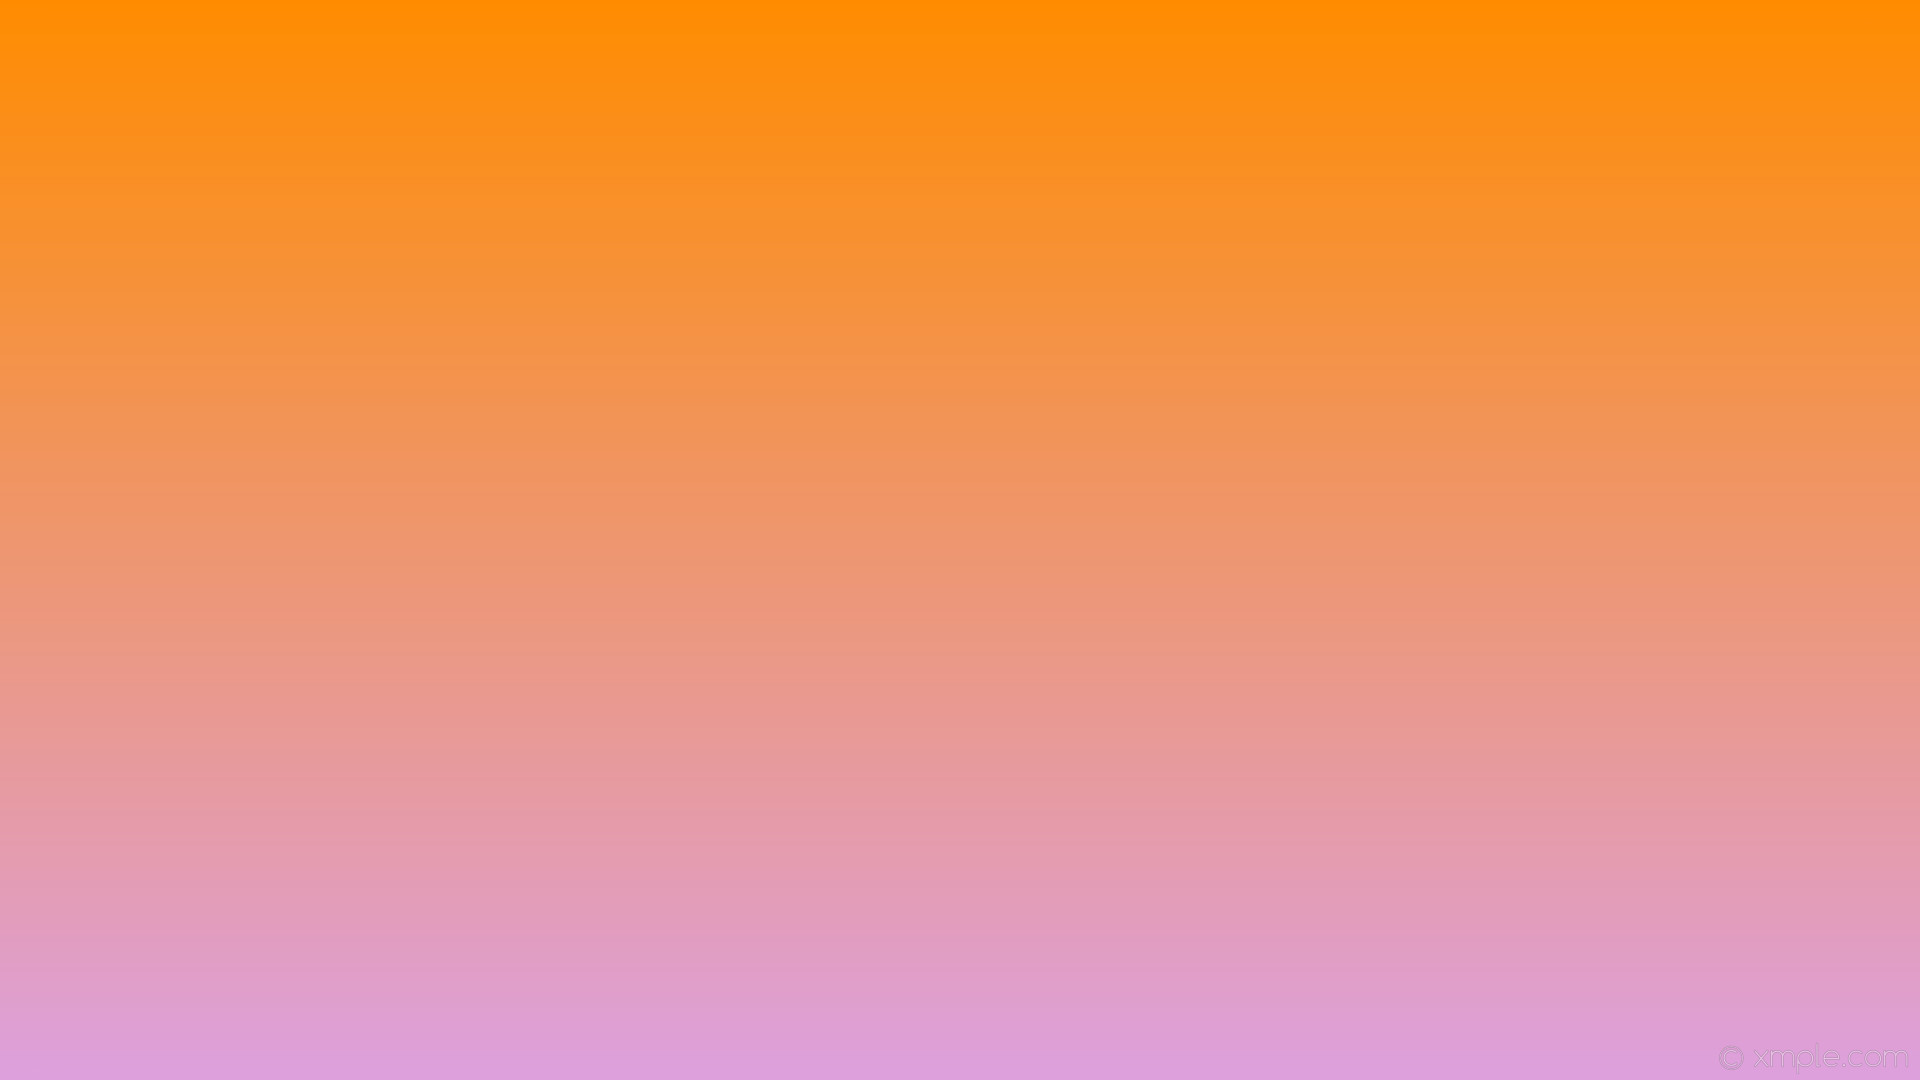 1920x1080 wallpaper linear orange purple gradient plum dark orange #dda0dd #ff8c00  270Â°